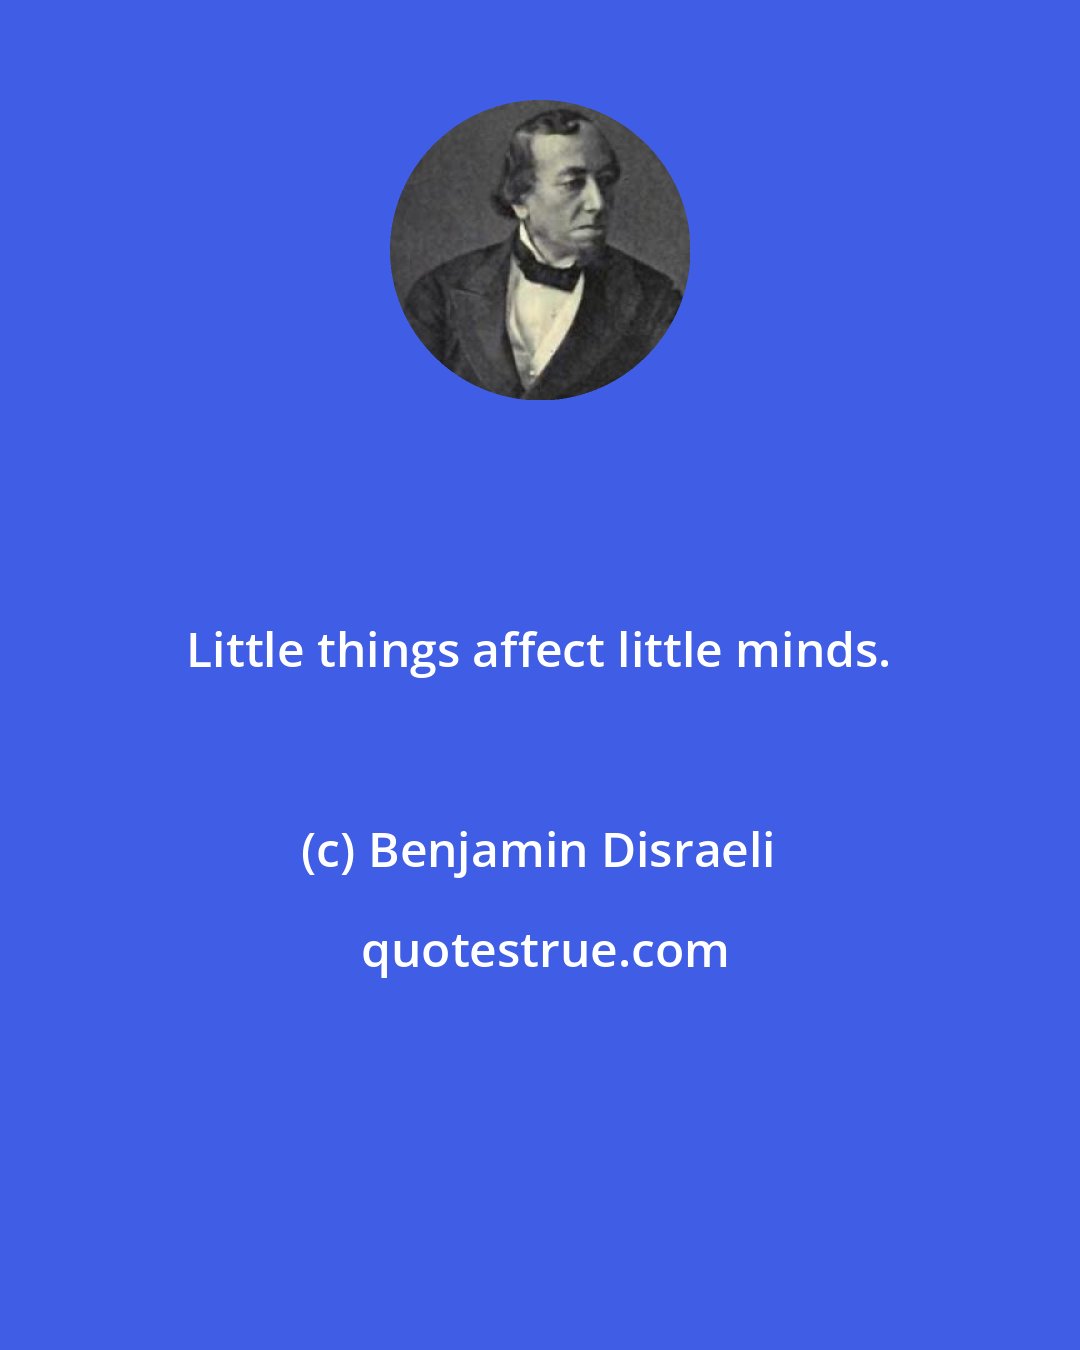 Benjamin Disraeli: Little things affect little minds.